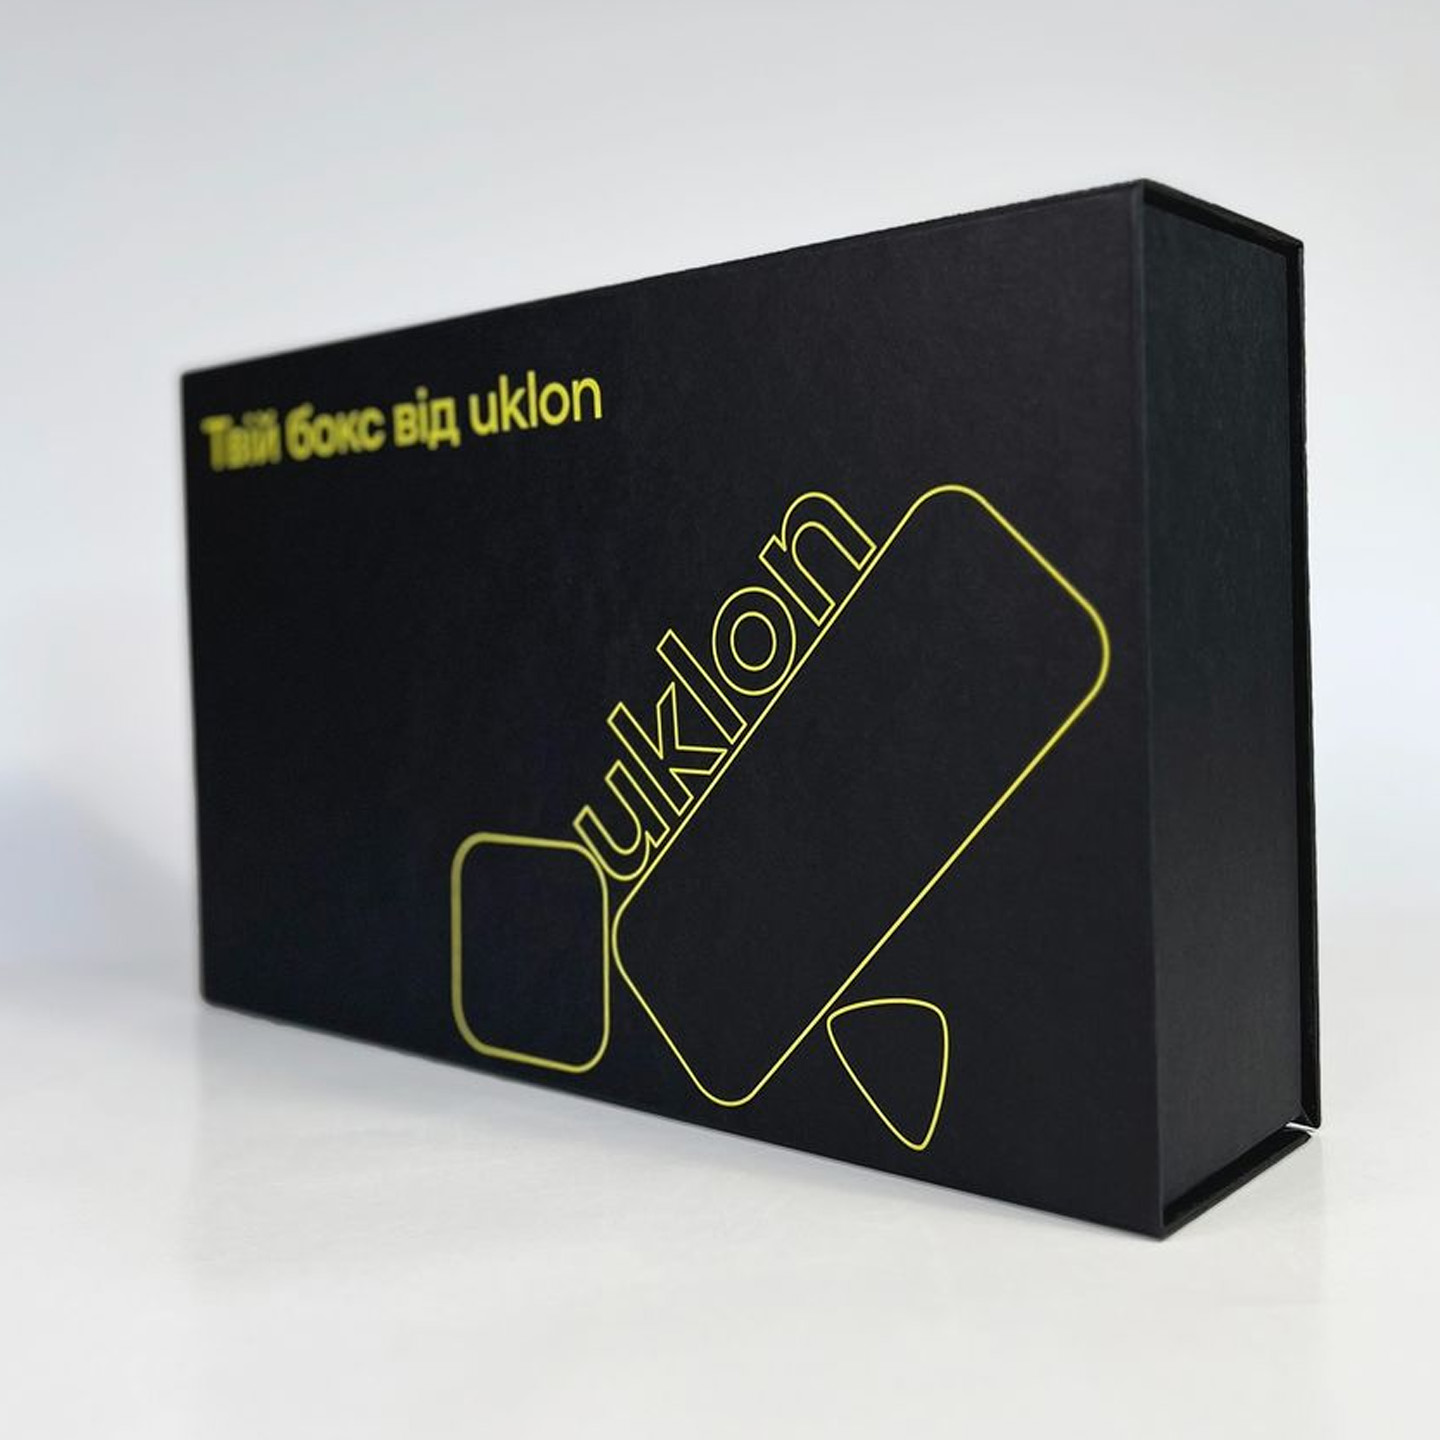 Boxes for Uklon 2